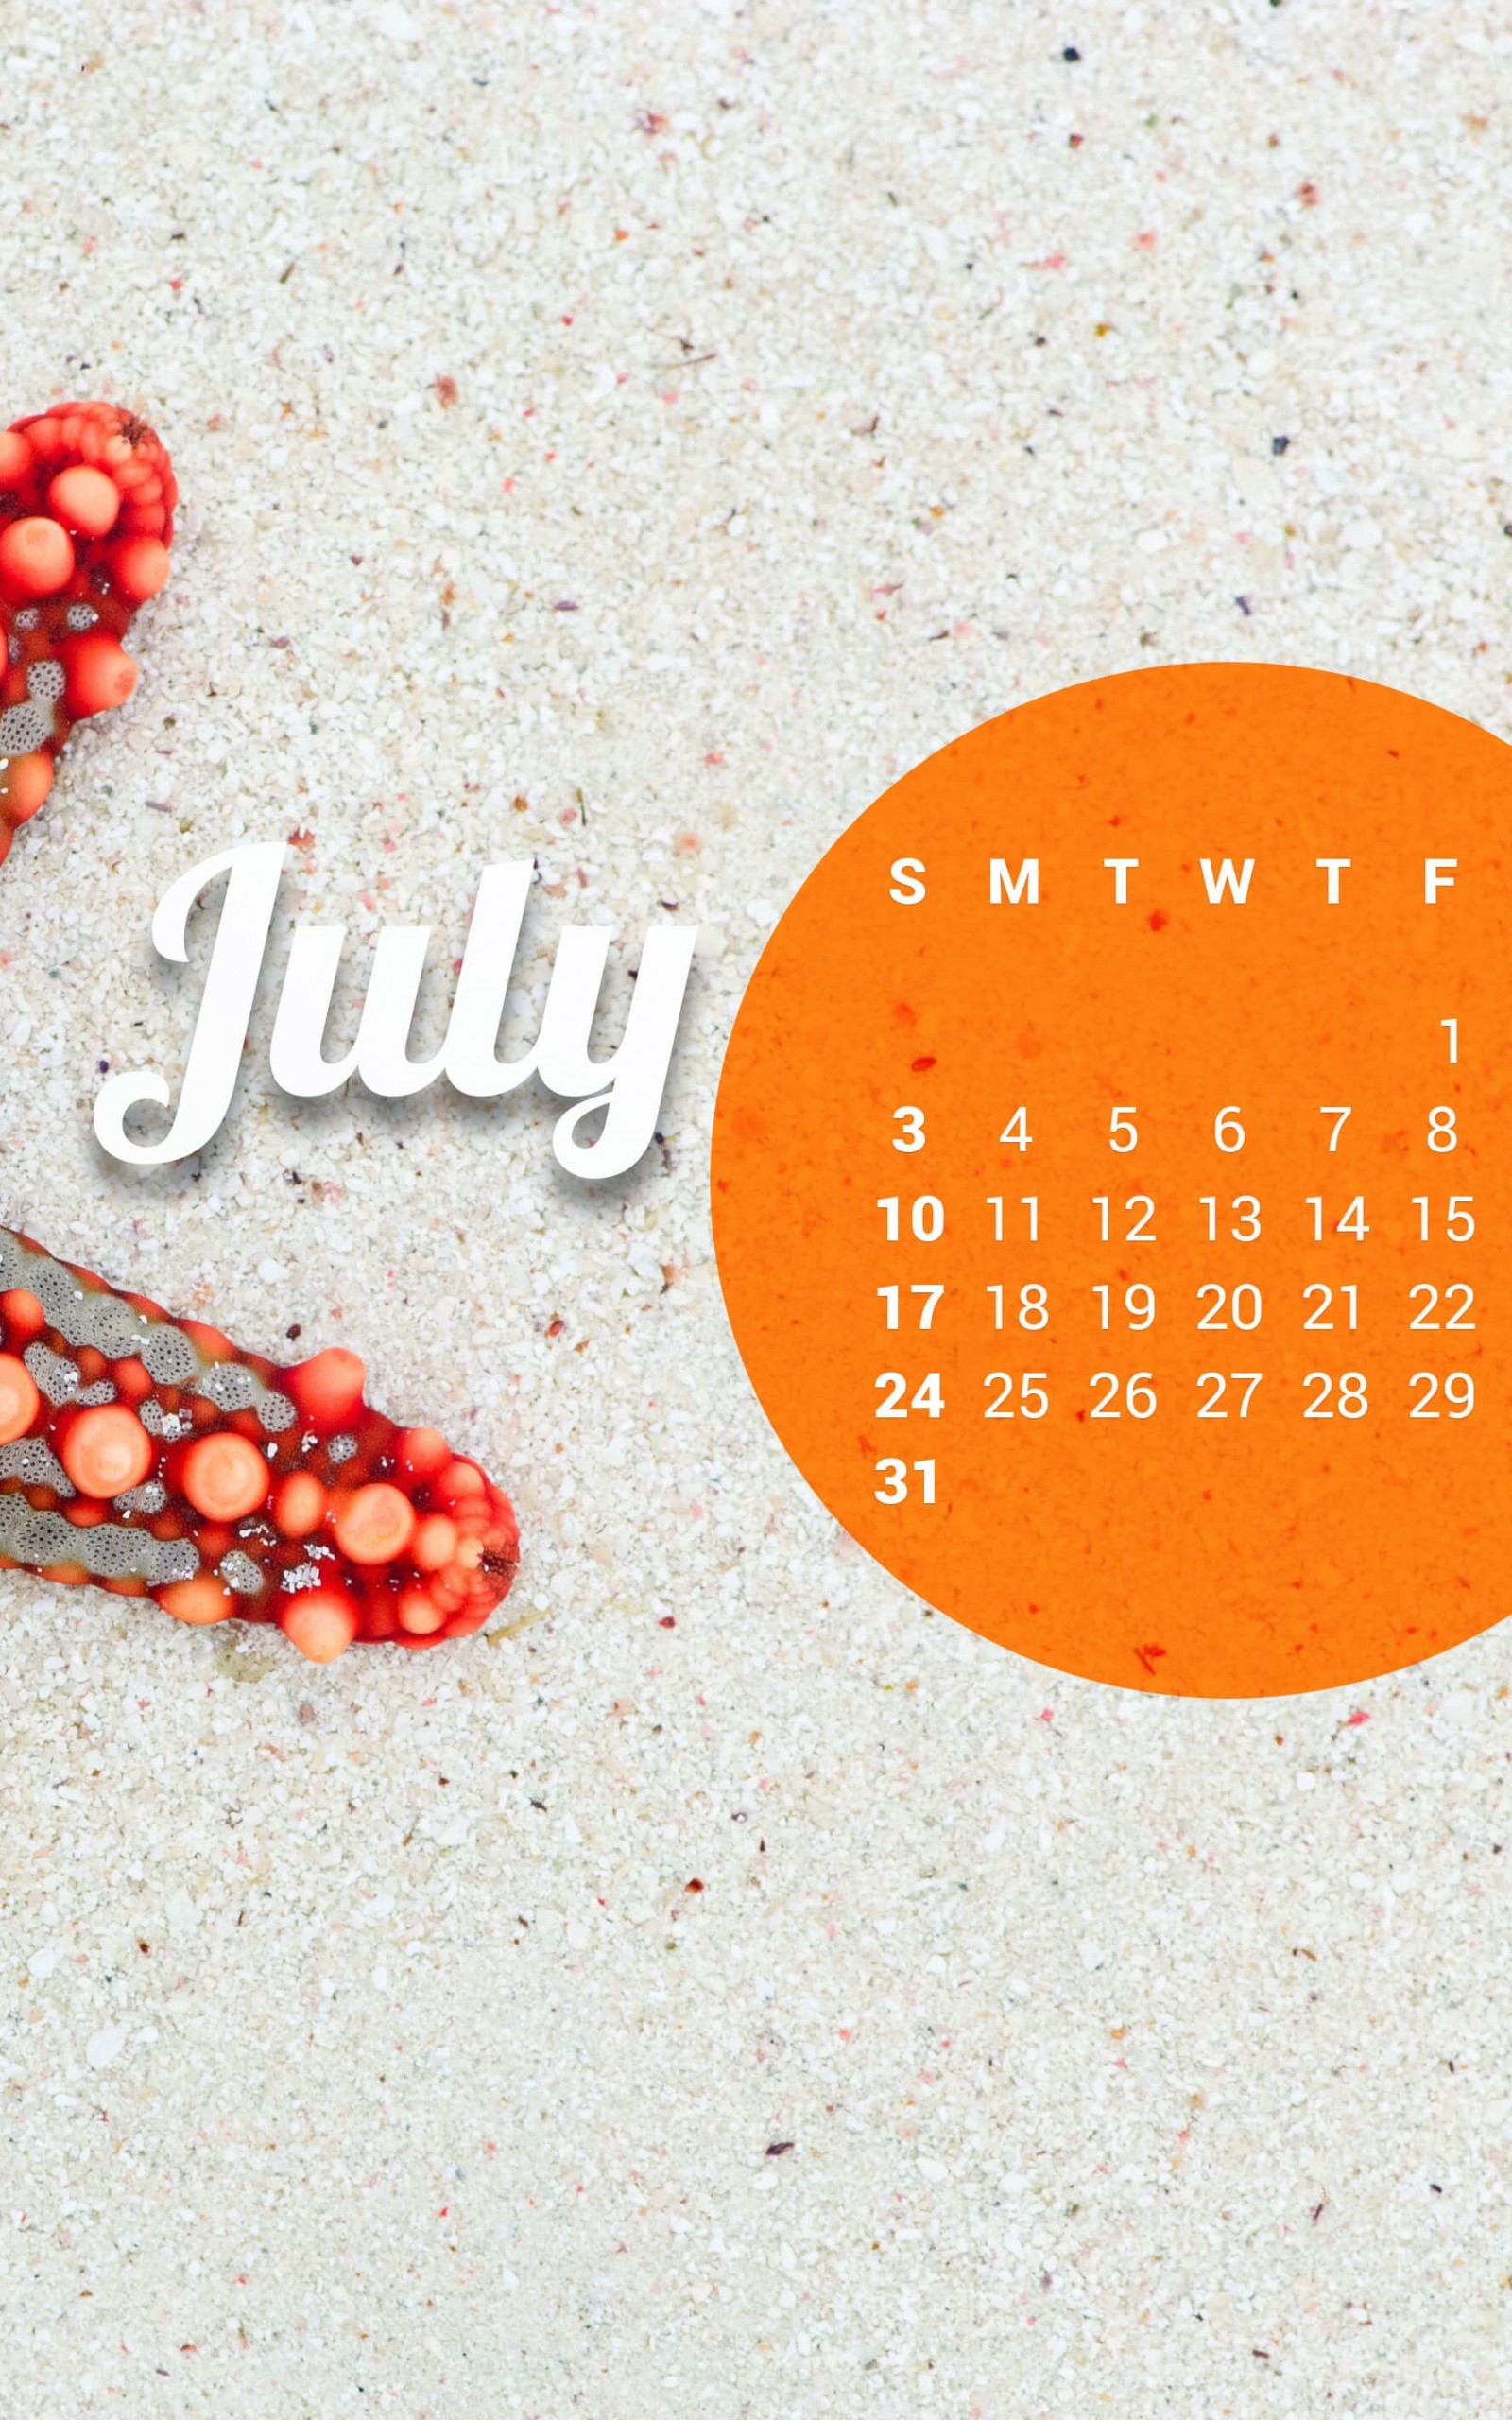 July 2016 Calendar Wallpaper for Amazon Kindle Fire HDX 8.9